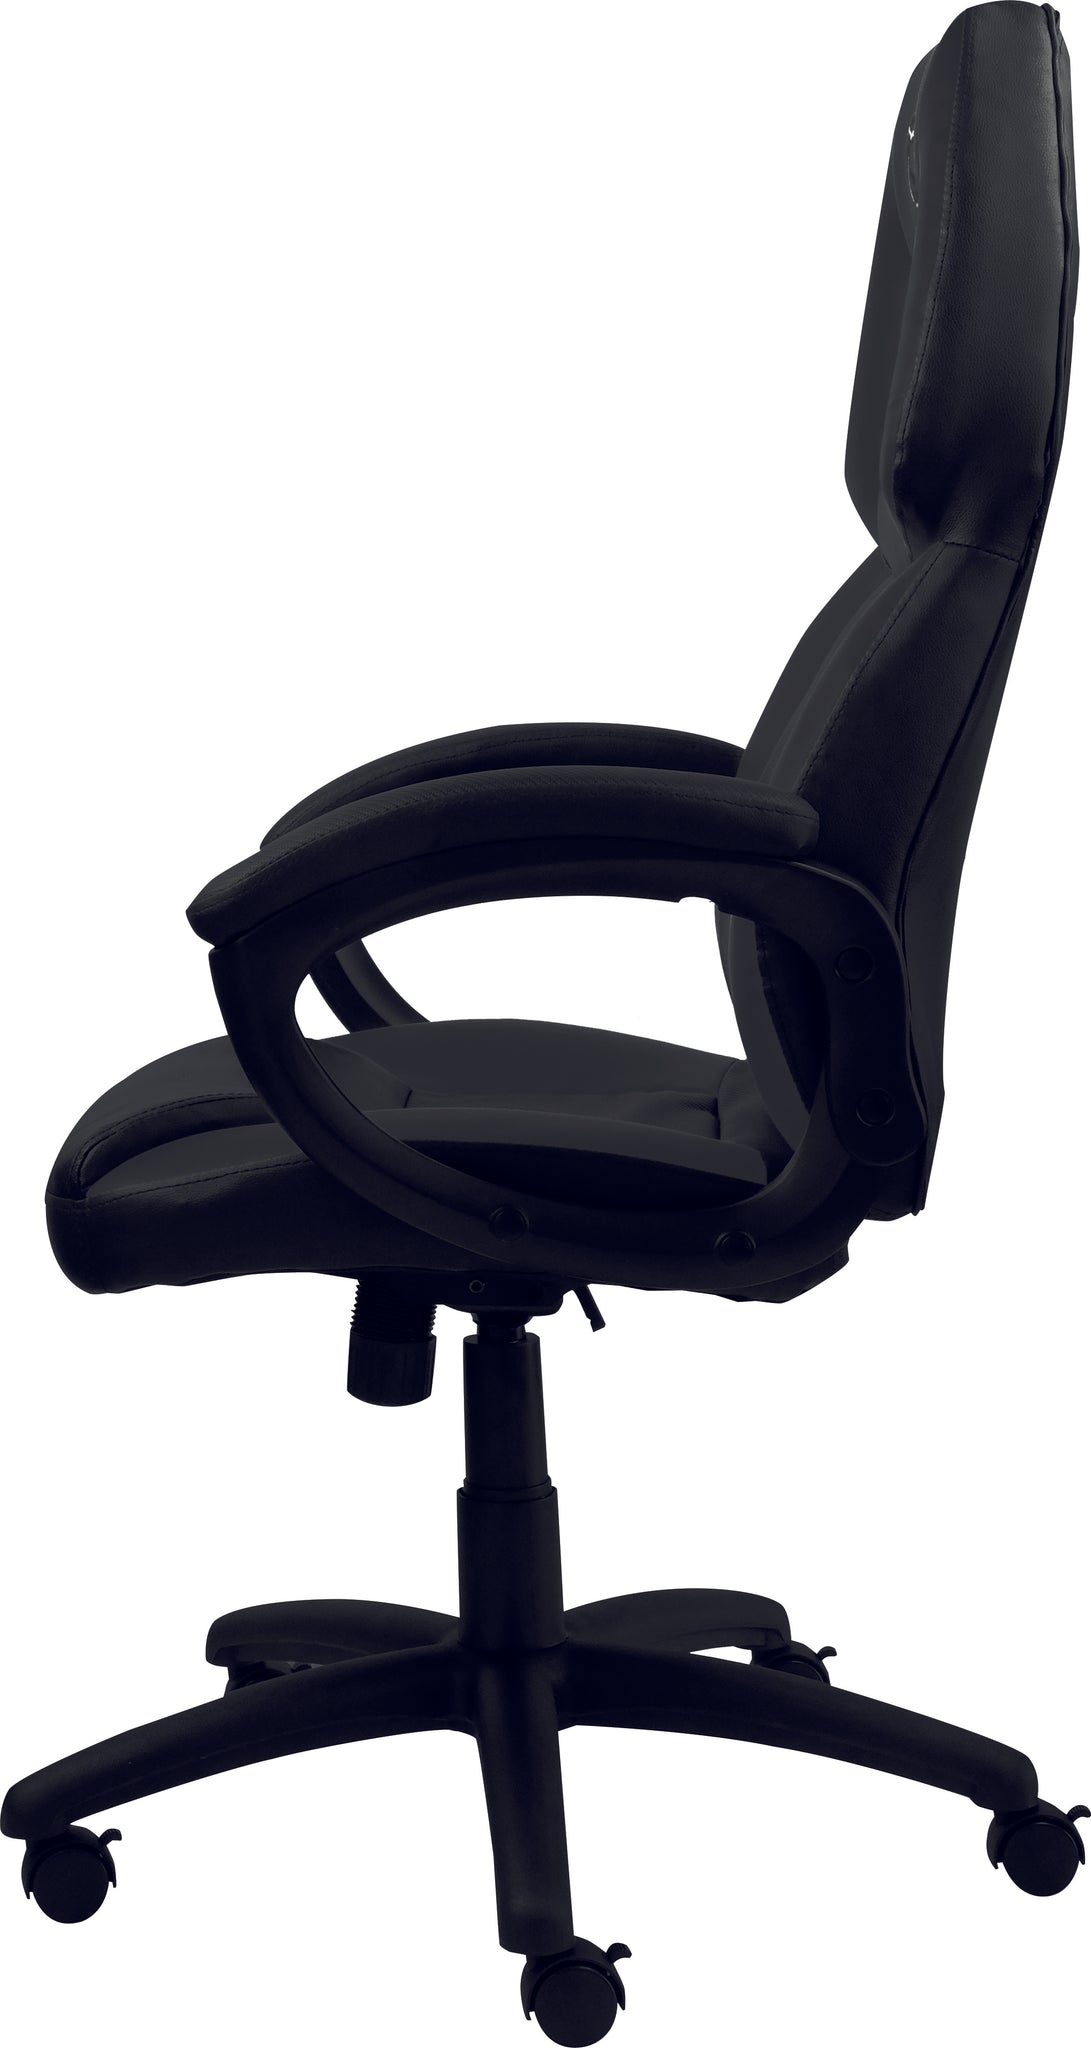 campus Cyberruimte genade Qware Gaming Chair Castor - Black